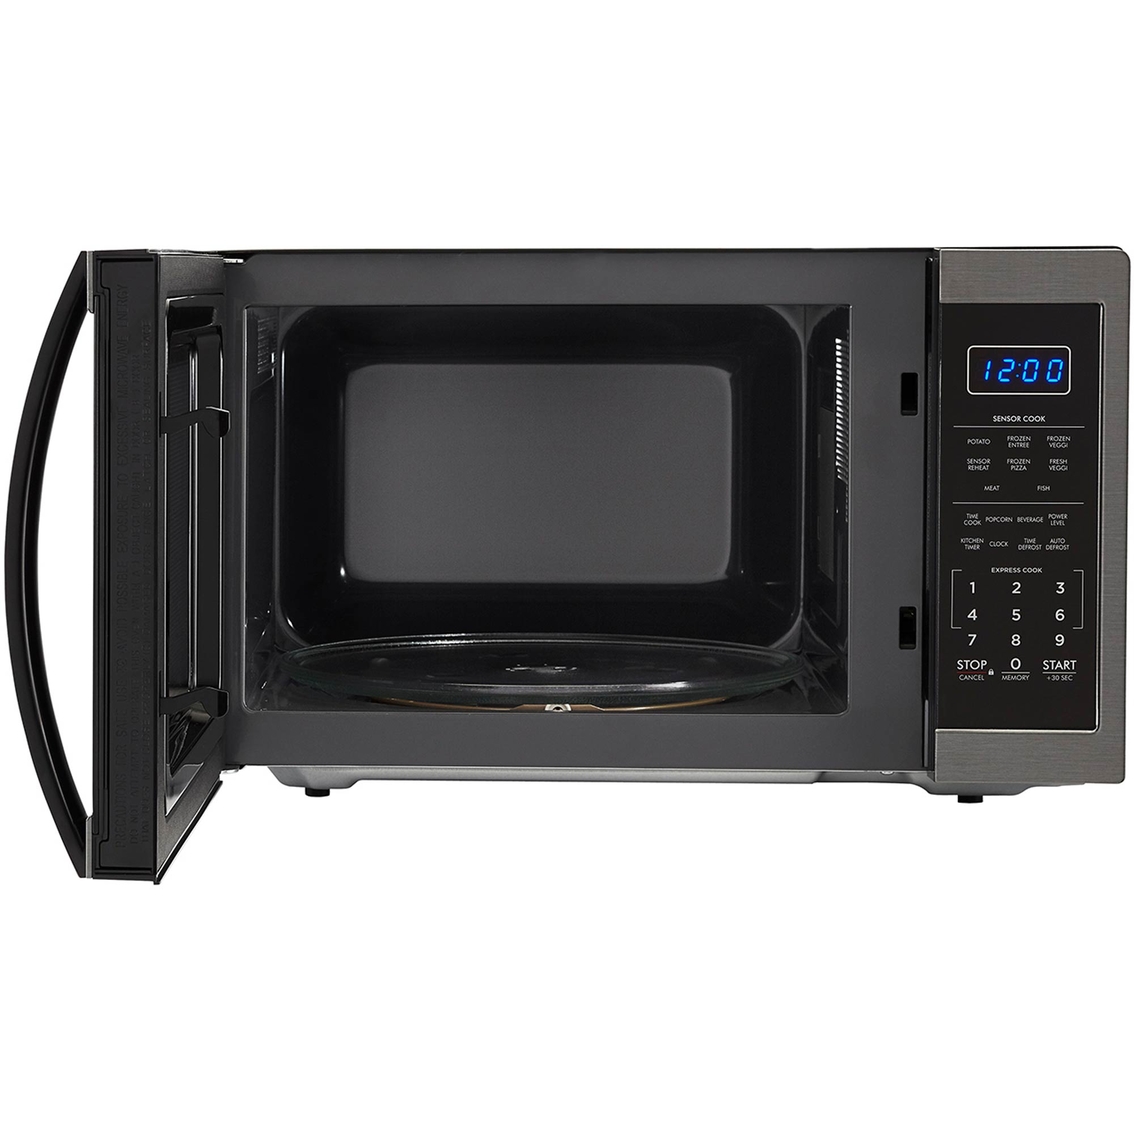 Buy Sharp 1000w White Microwave - Part# SMC1461HW